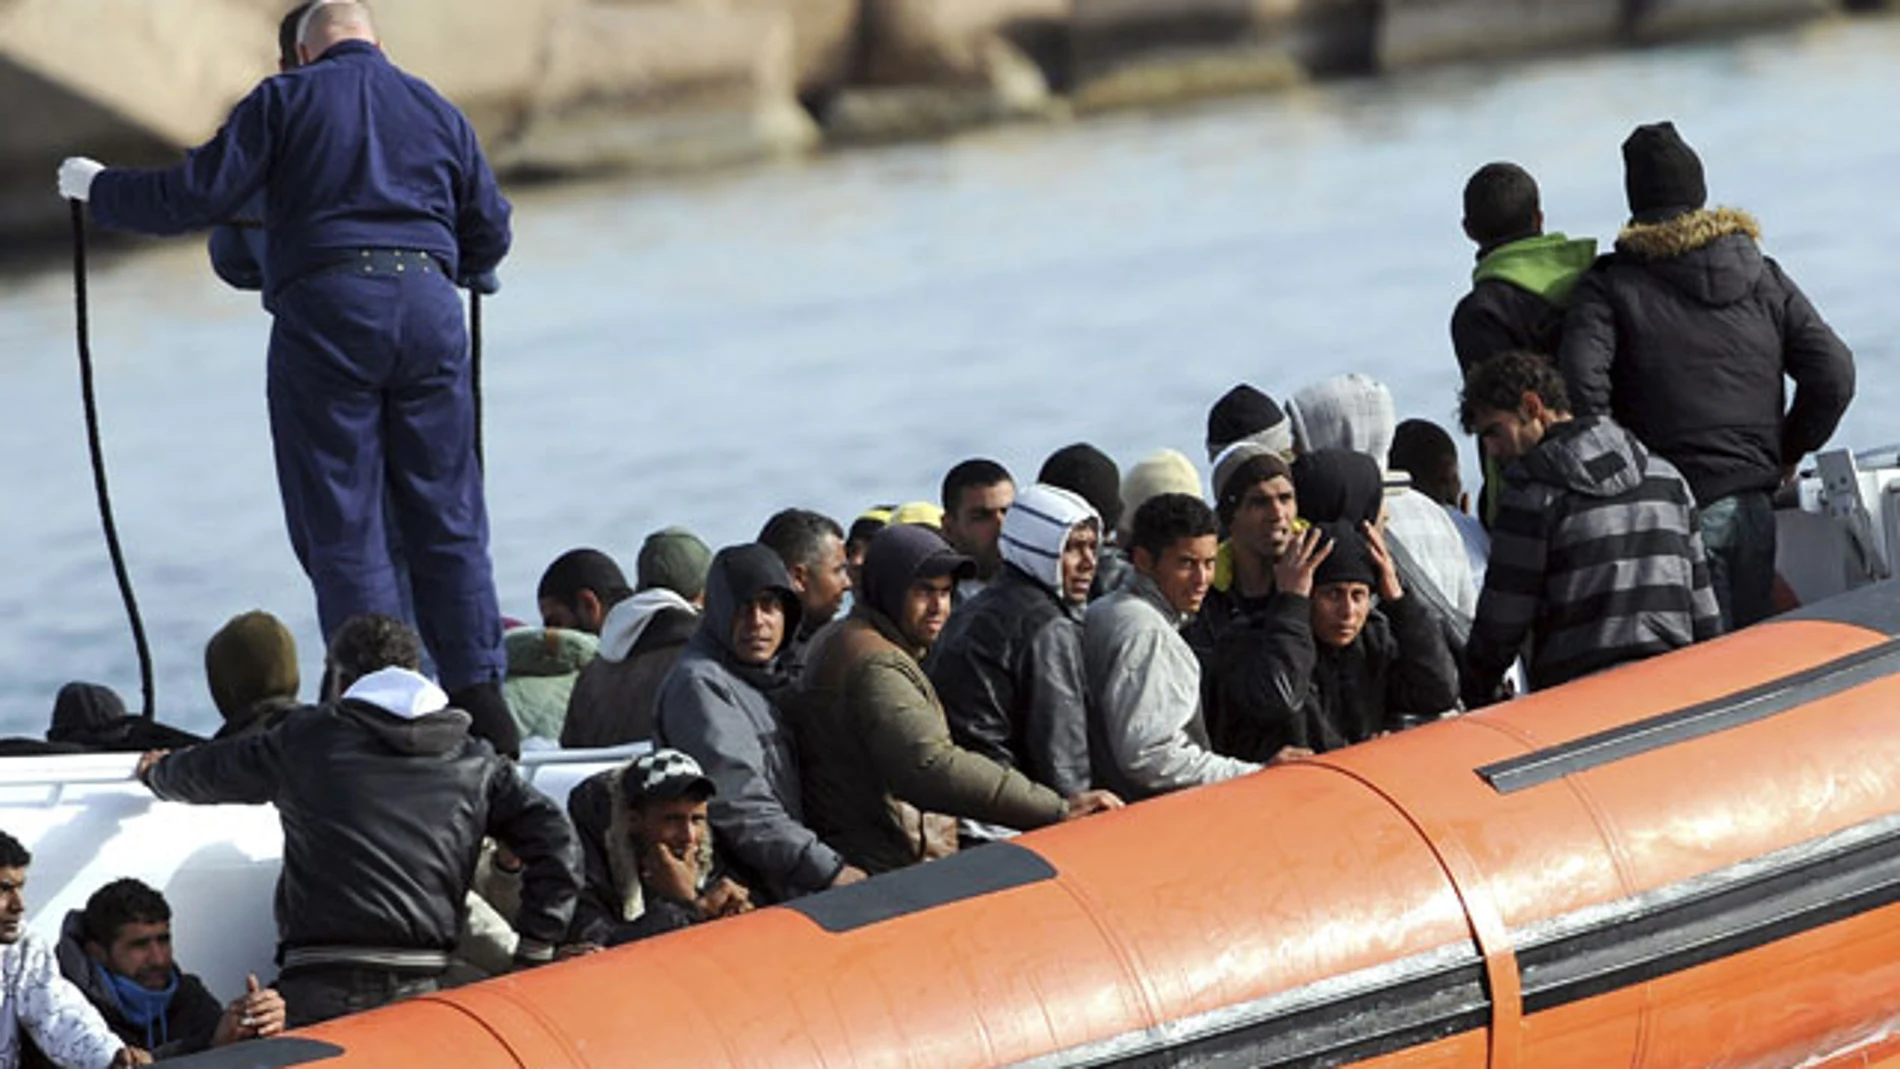 Inmigrantes llegando a Lampedusa